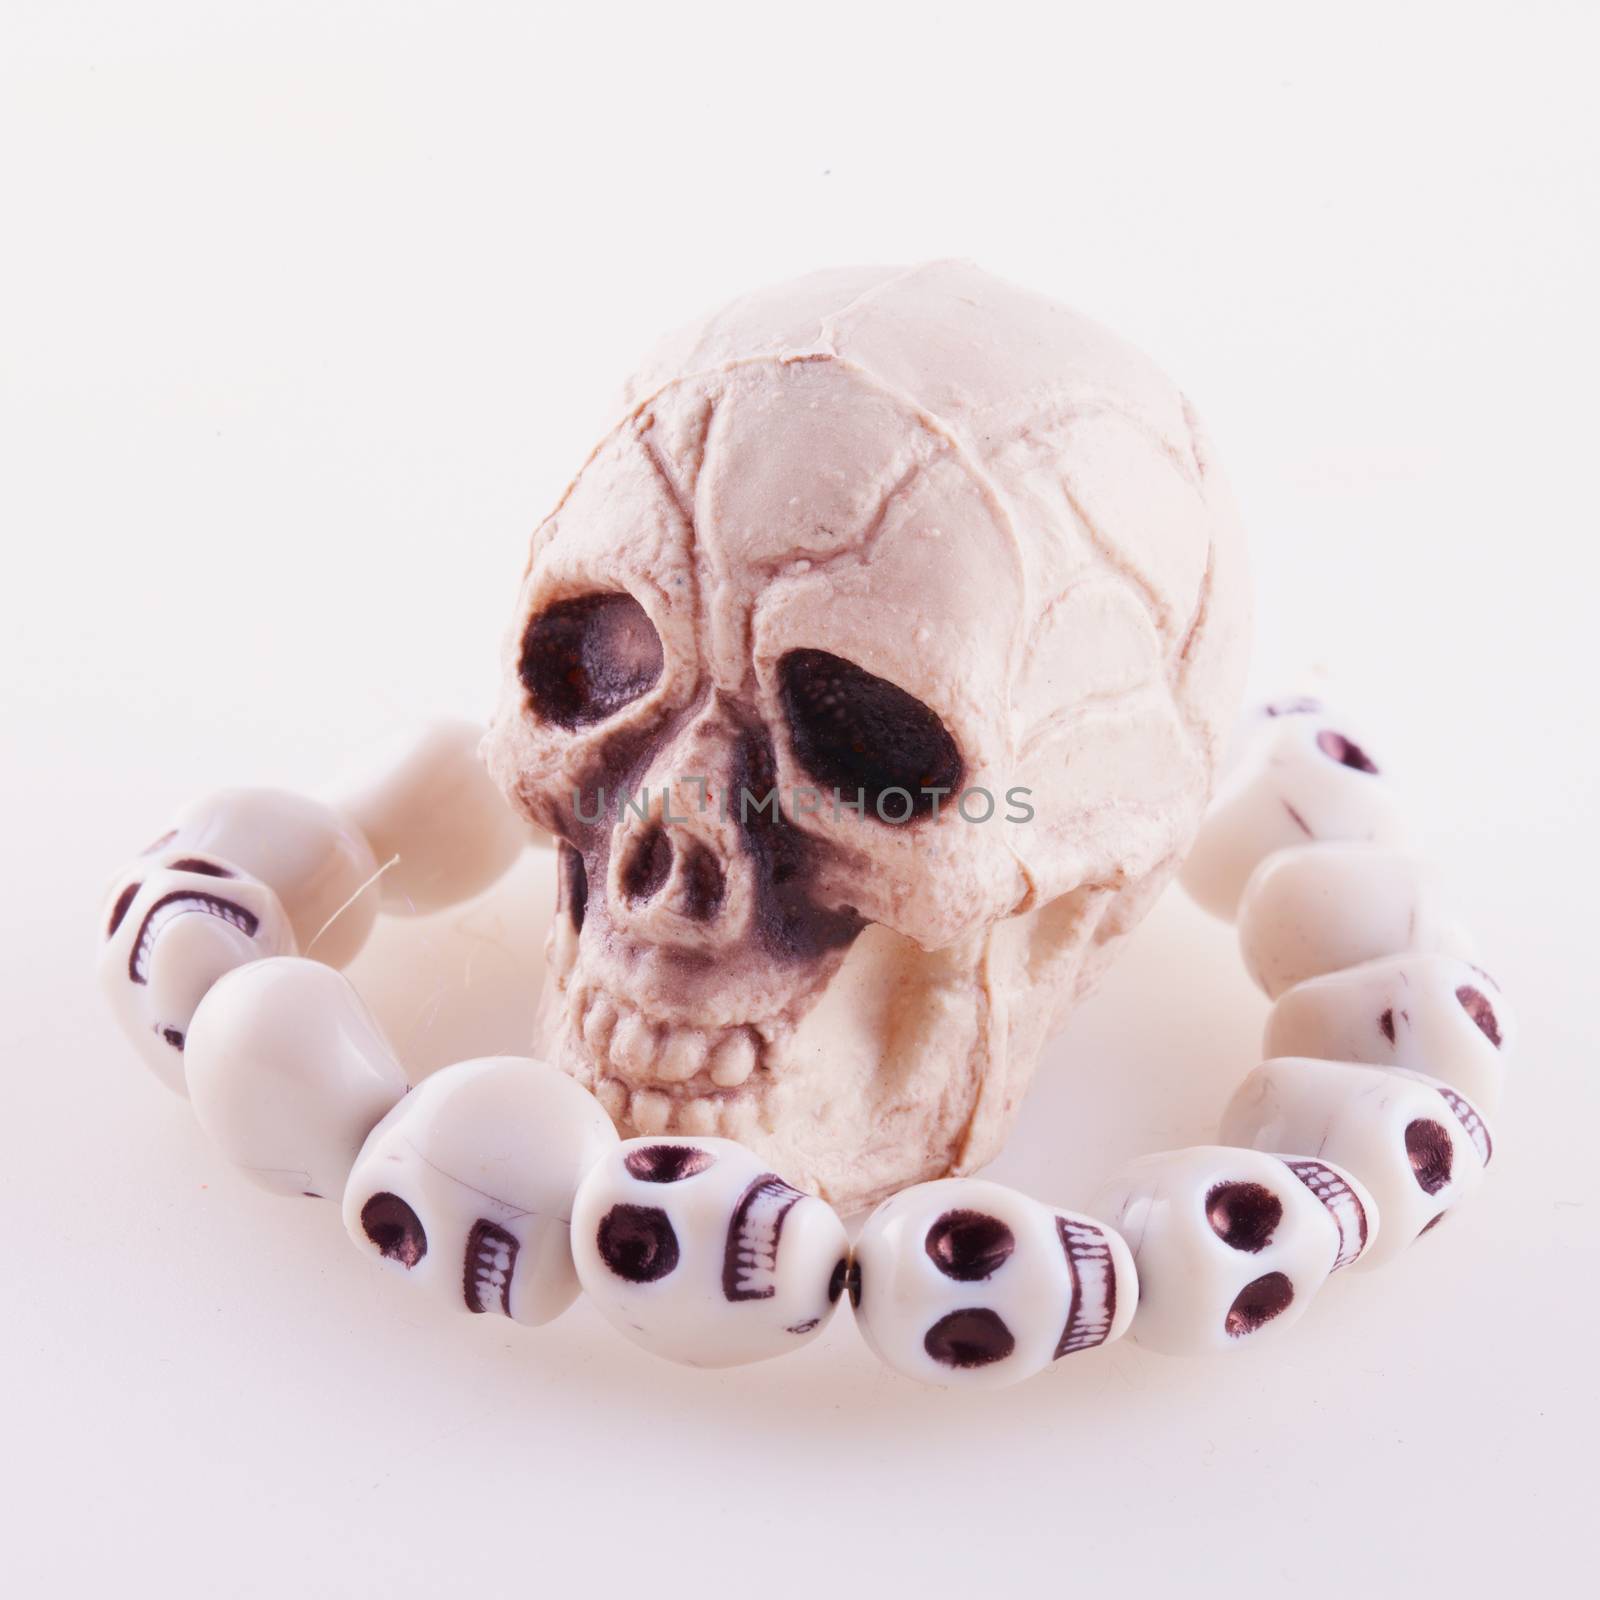 Skull with skull necklace over white background